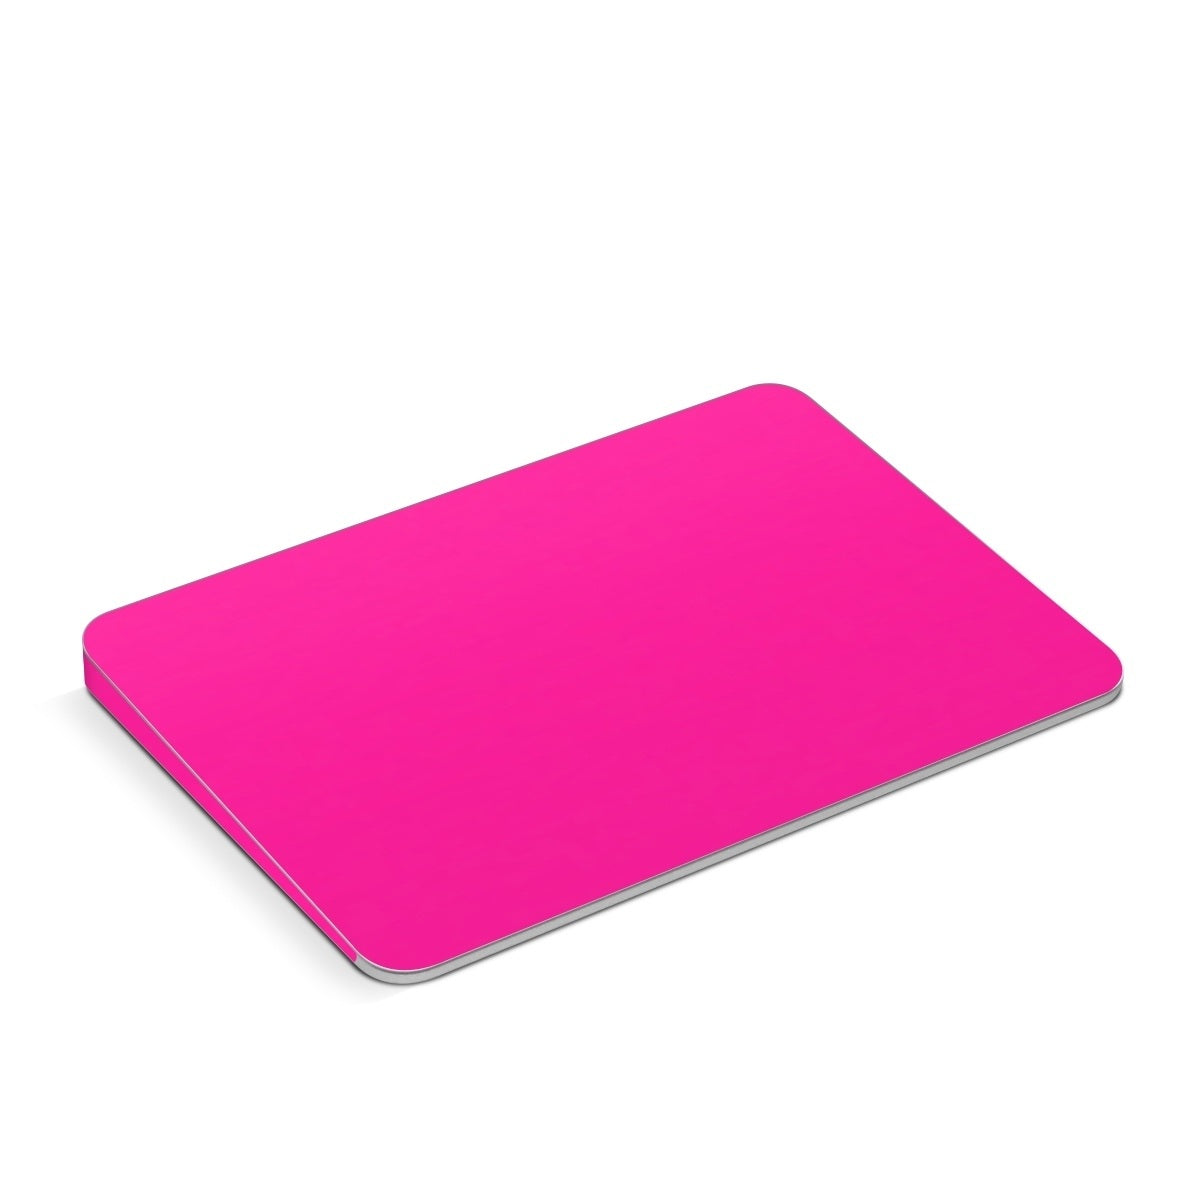 Solid State Malibu Pink - Apple Magic Trackpad Skin